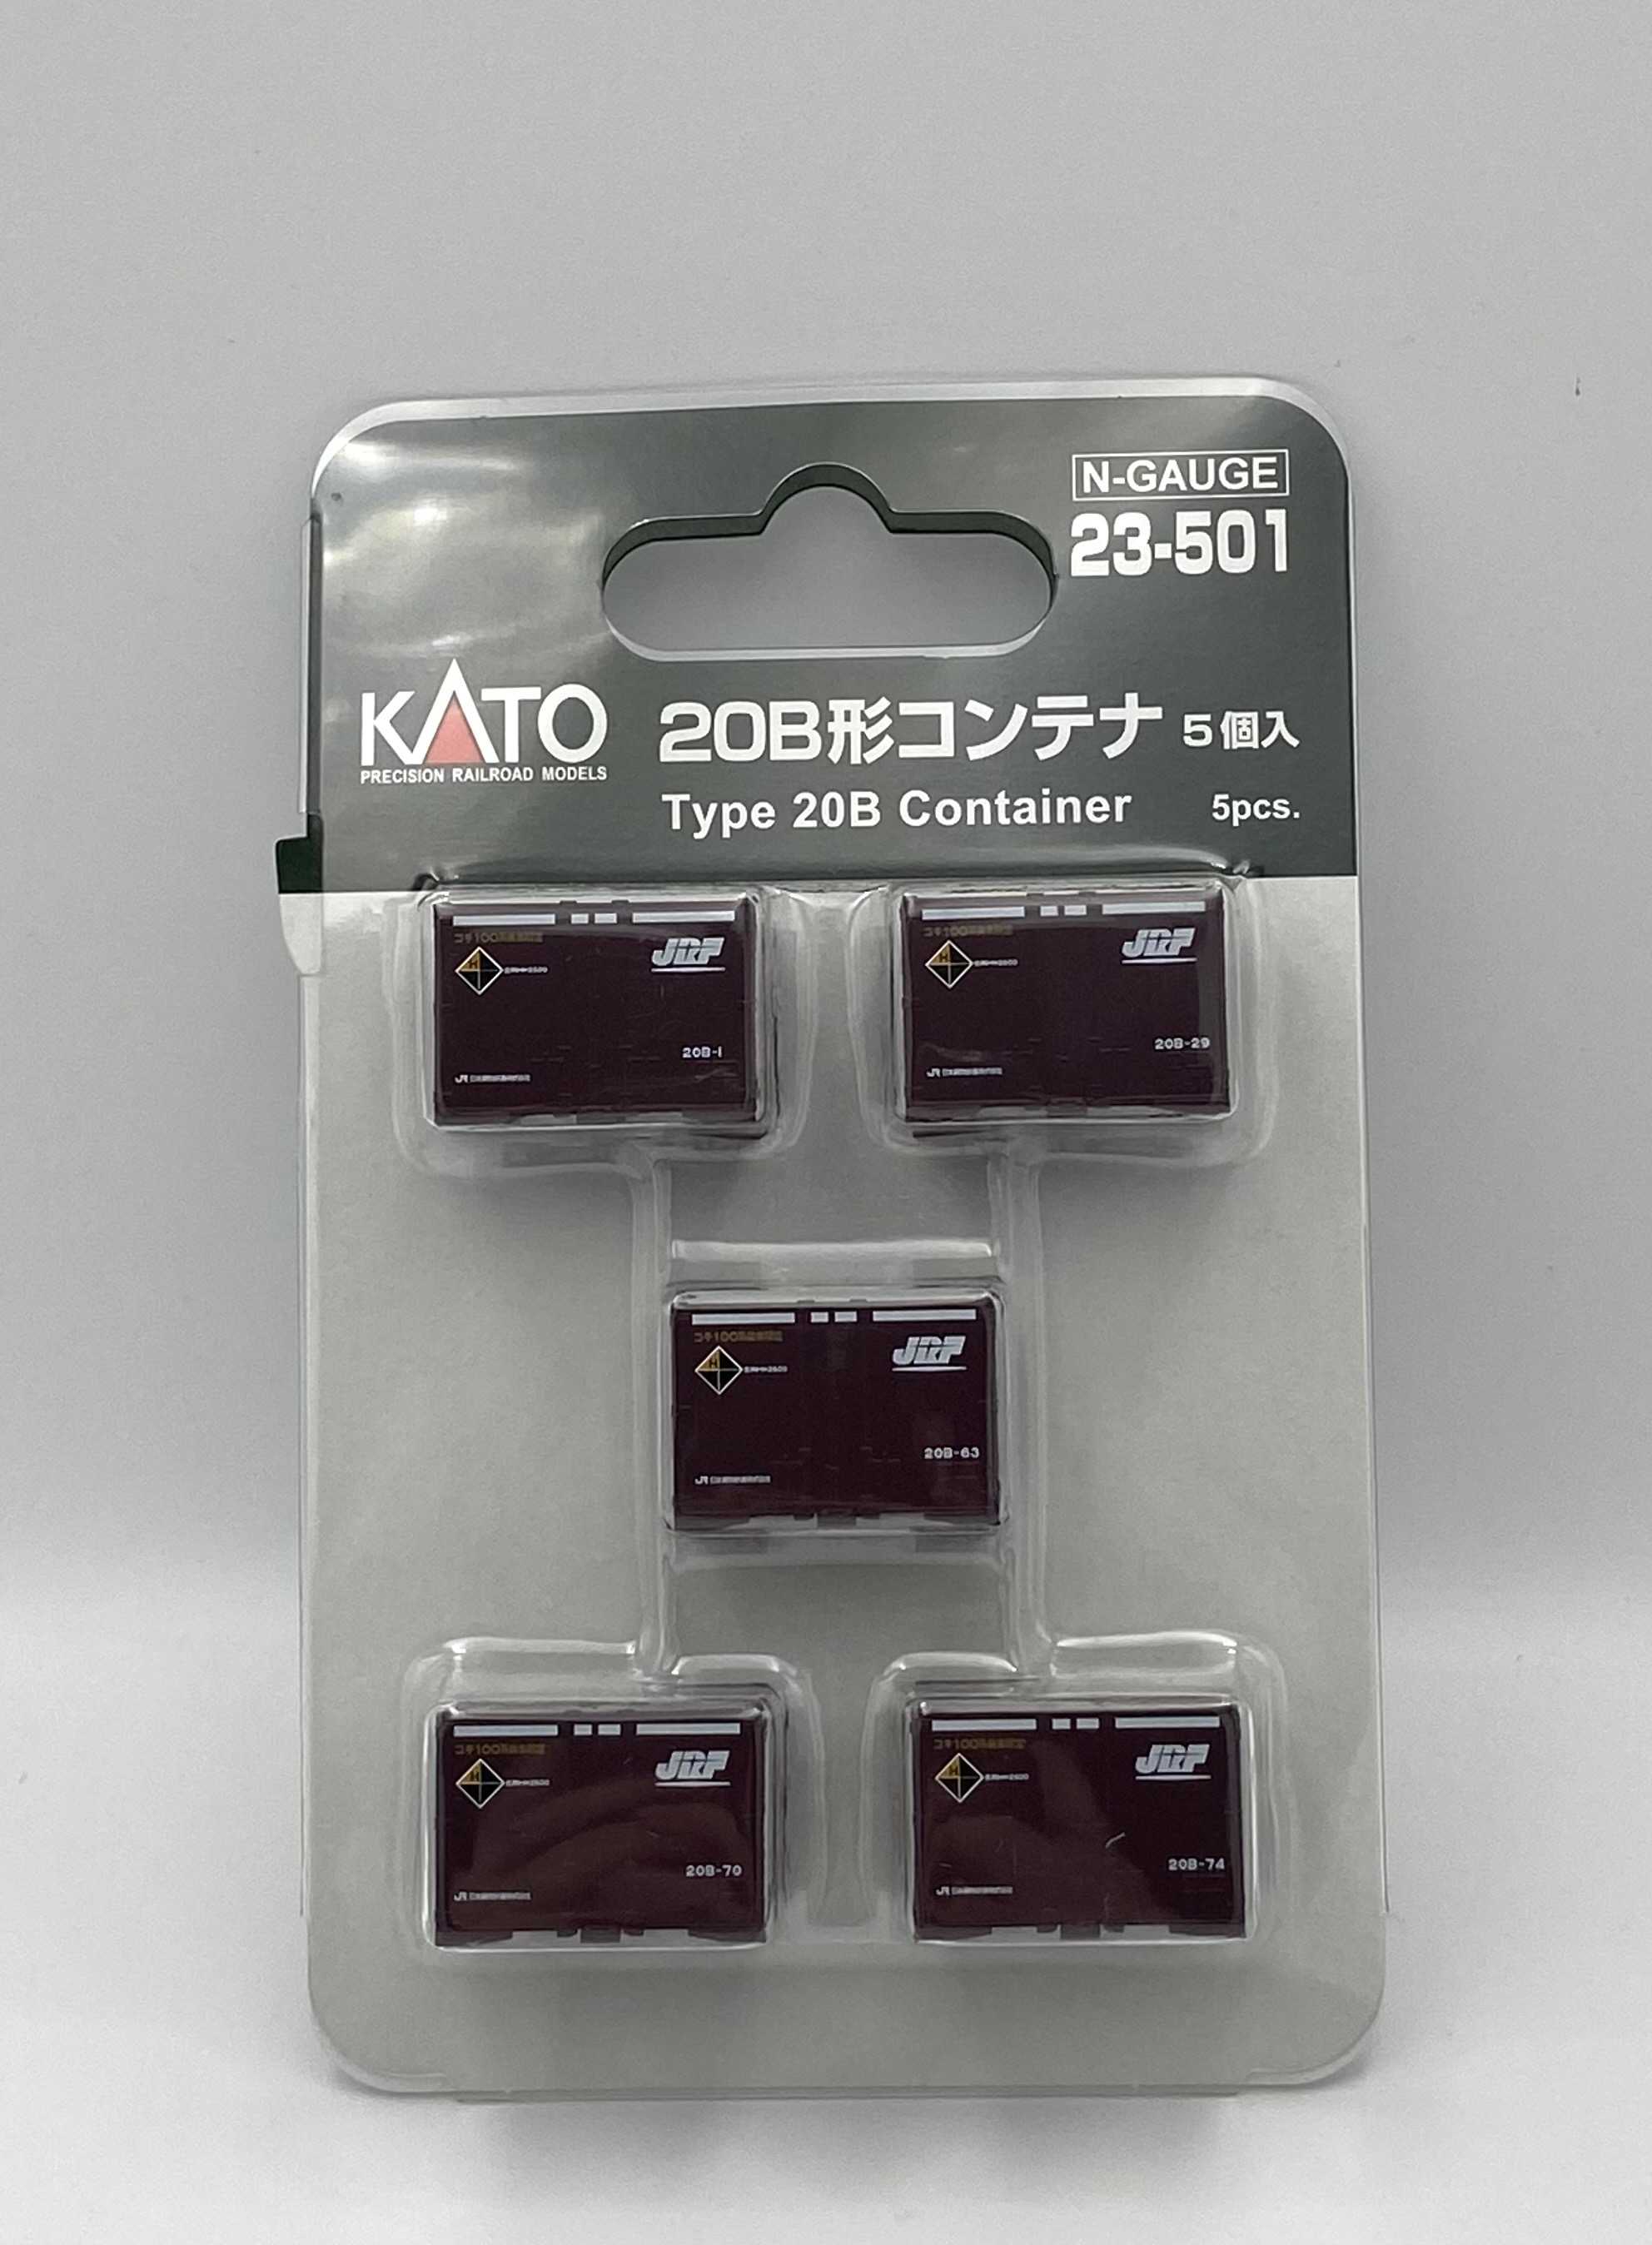 Mini 預購中 Kato 23-501 N規 20B形 貨櫃 5個